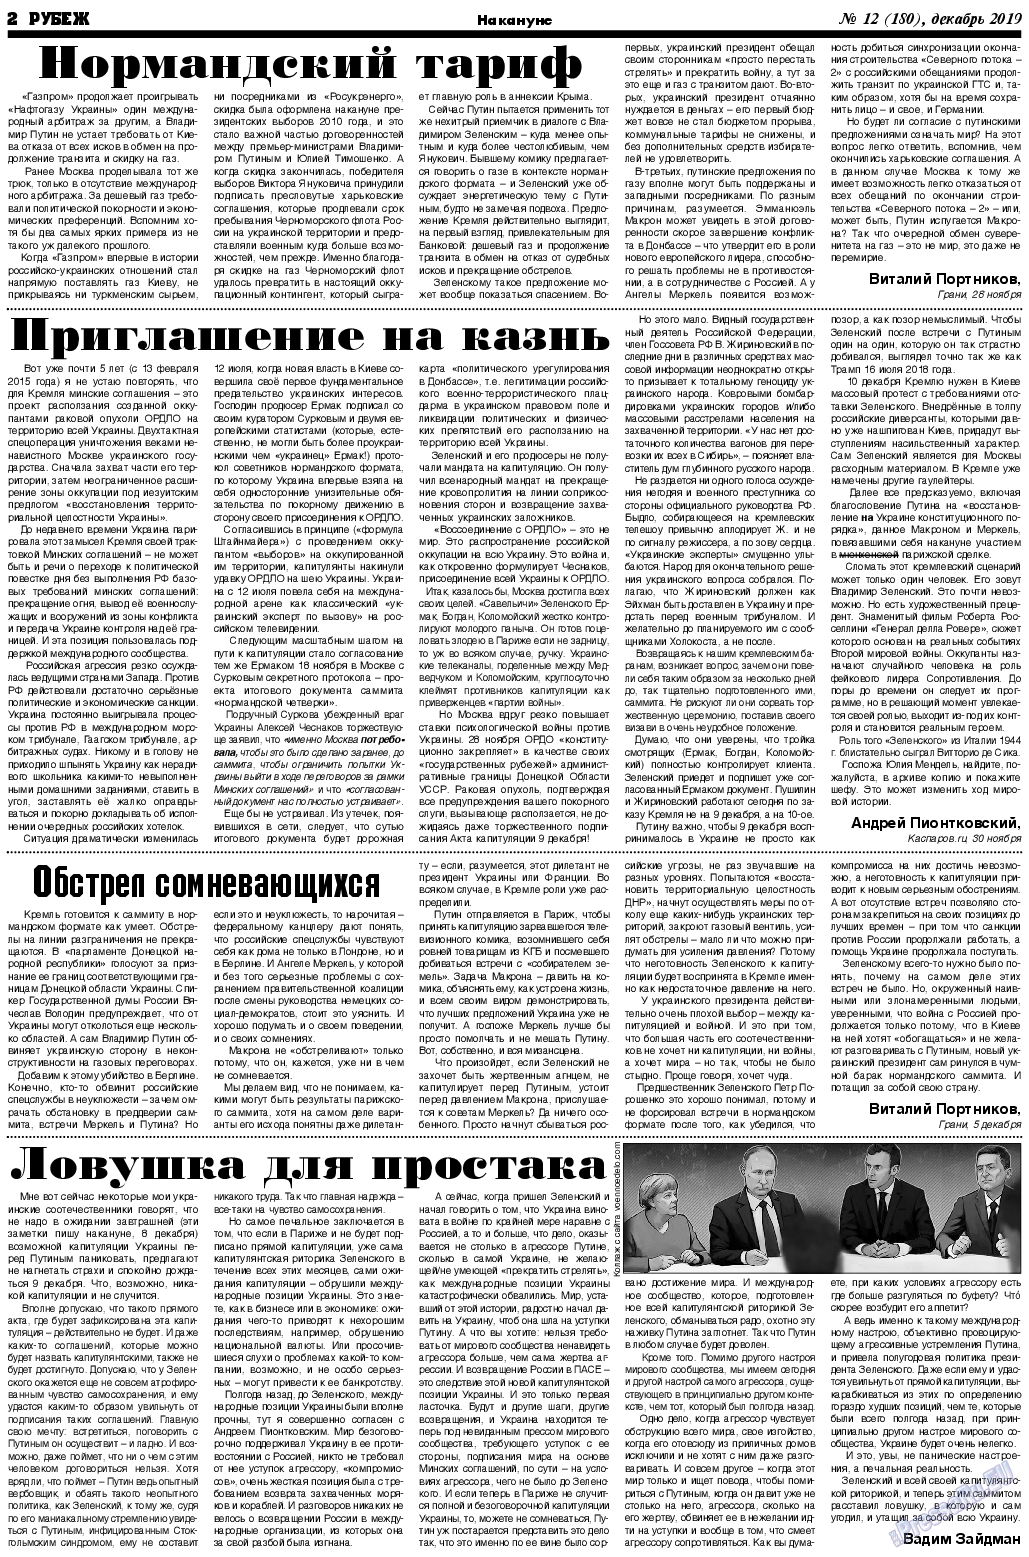 Рубеж, газета. 2019 №12 стр.2